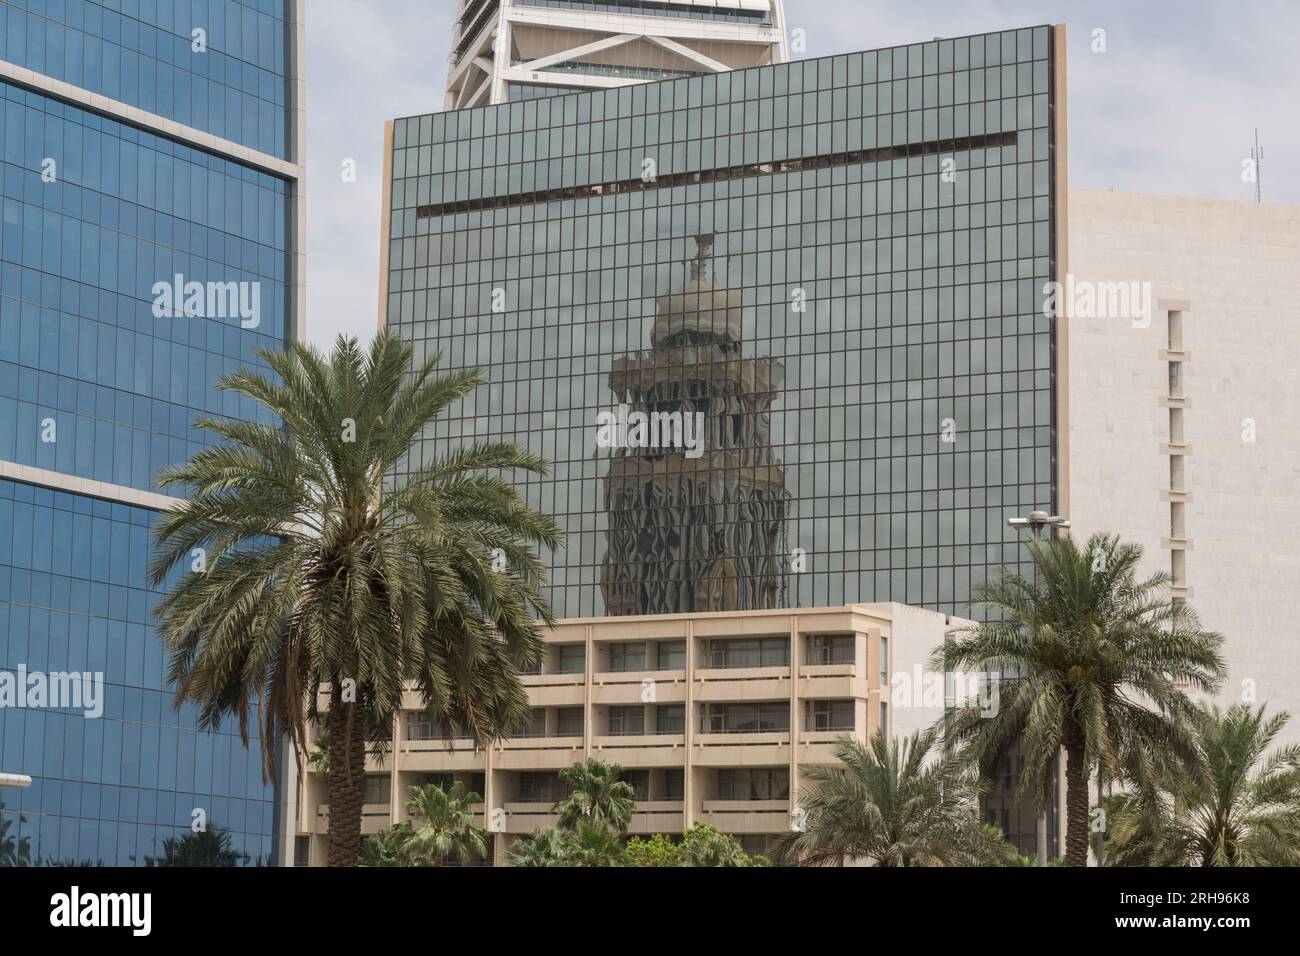 Reflet de la Tour Boudl / Hôtel Narcissus dans la façade vitrée de la Fondation Roi Faisal. King Fahd Rd, Al Olaya, Riyad, Arabie saoudite Banque D'Images